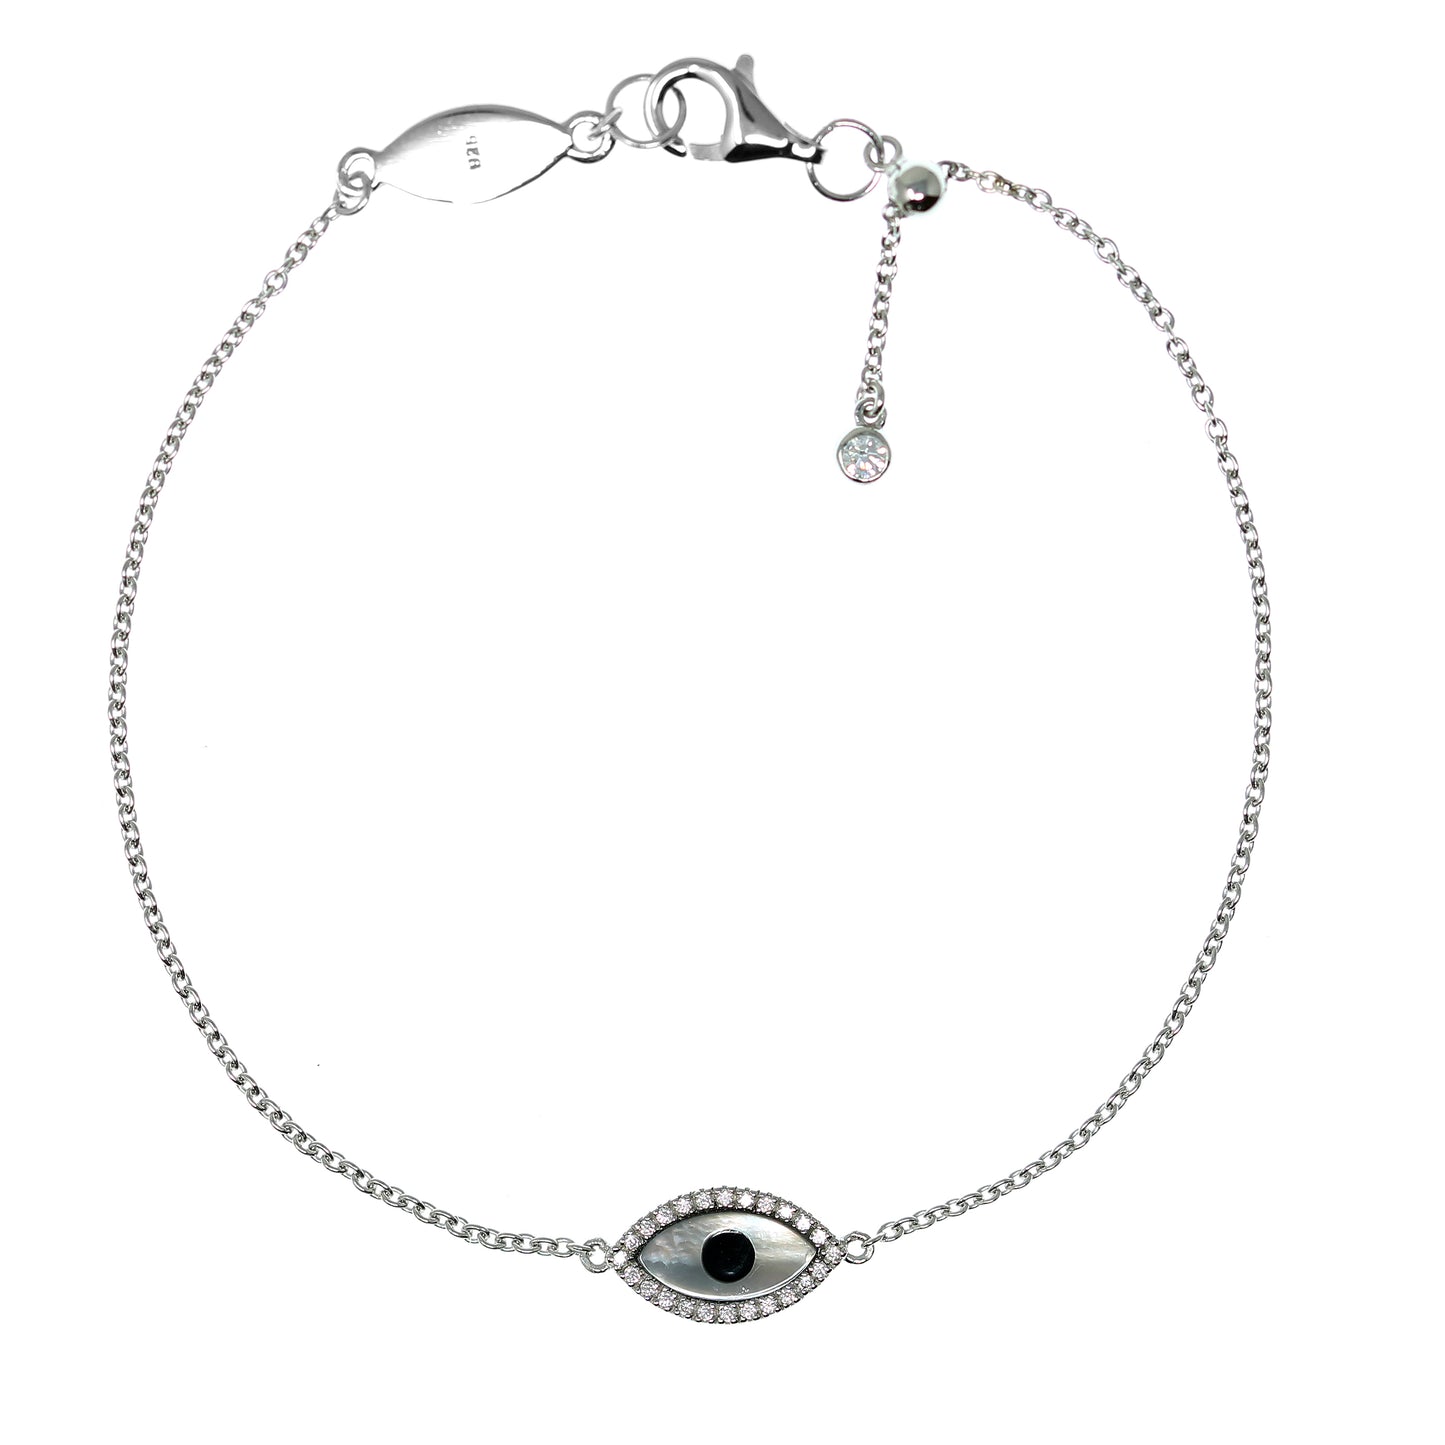 BT-13/S - Chain Bracelet with Evil Eye